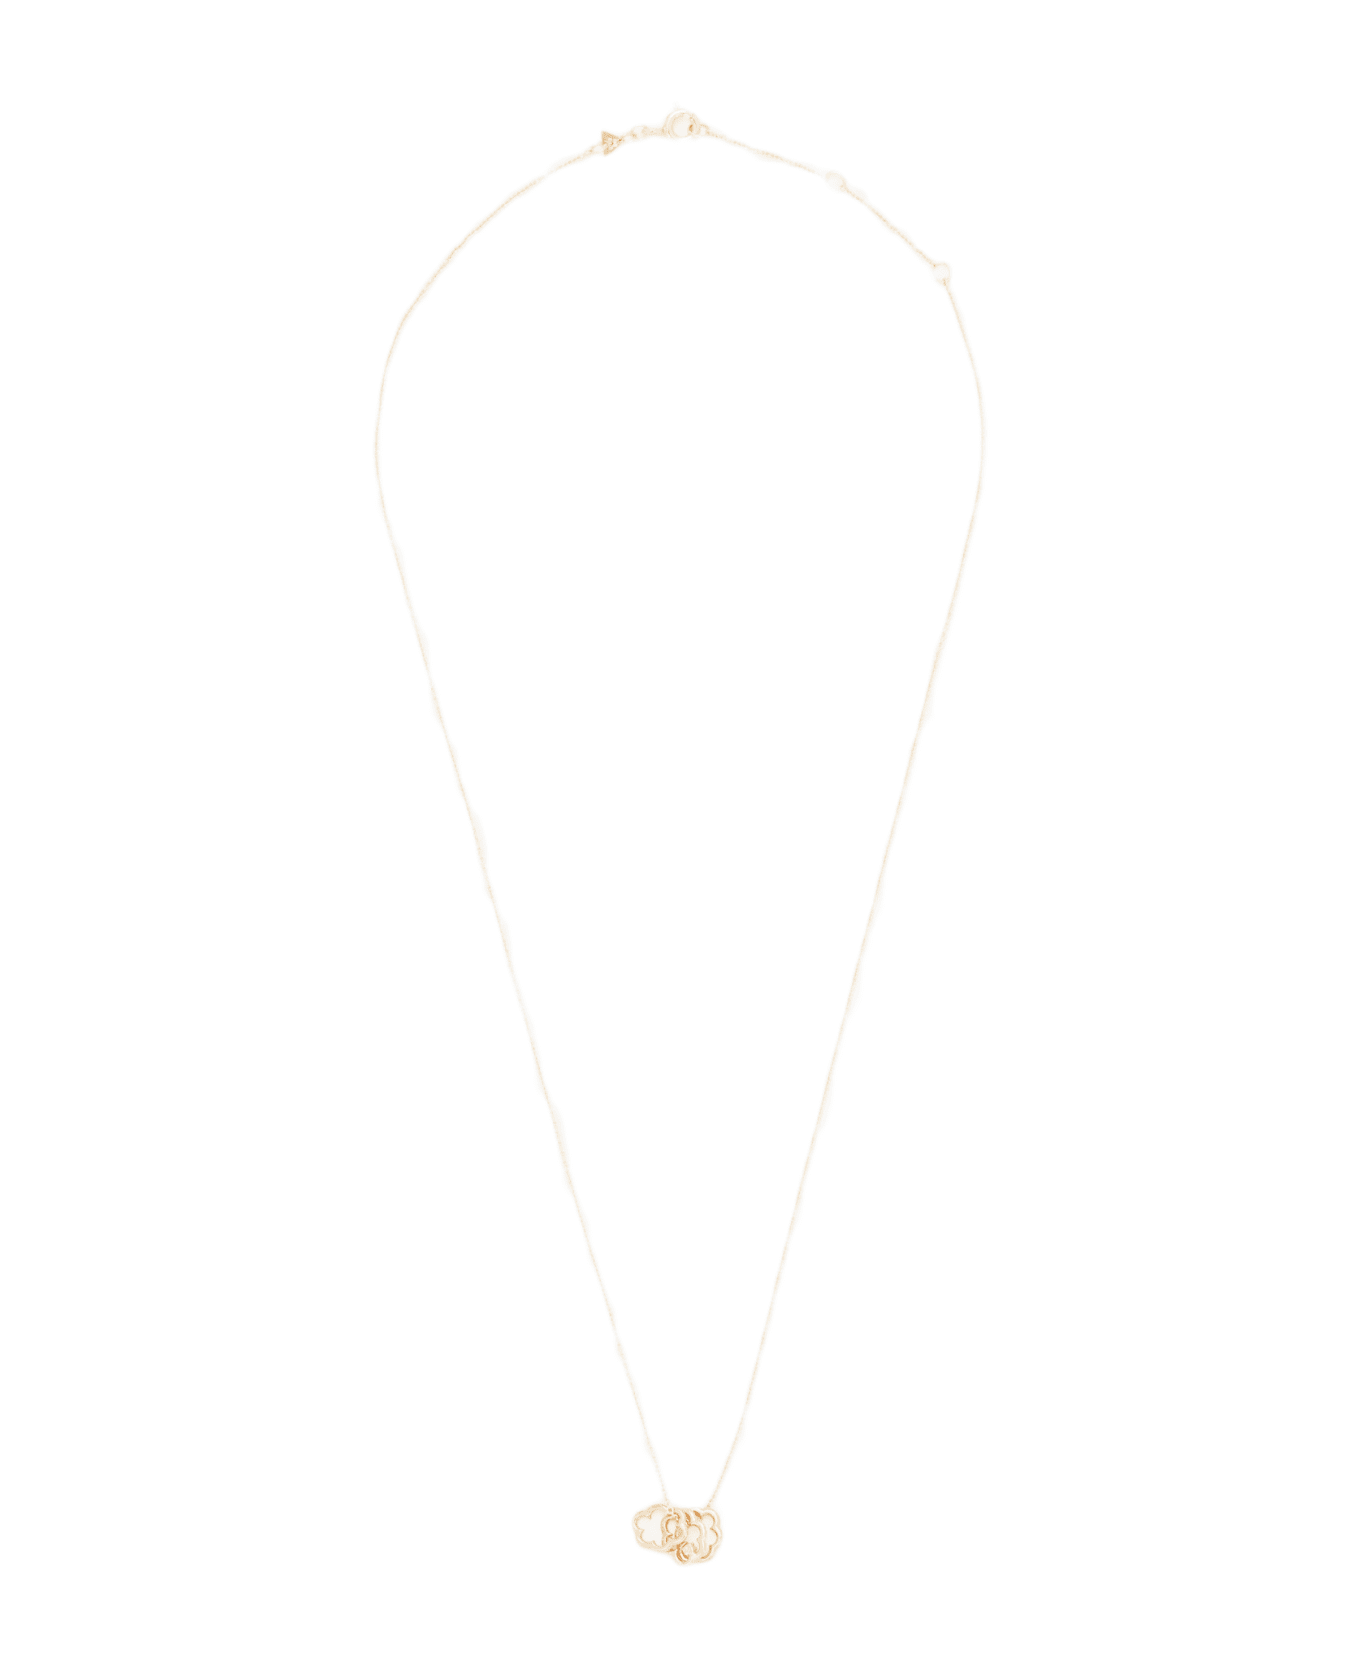 Aliita 9kt Gold With Diamond Nubecita Necklace - Golden